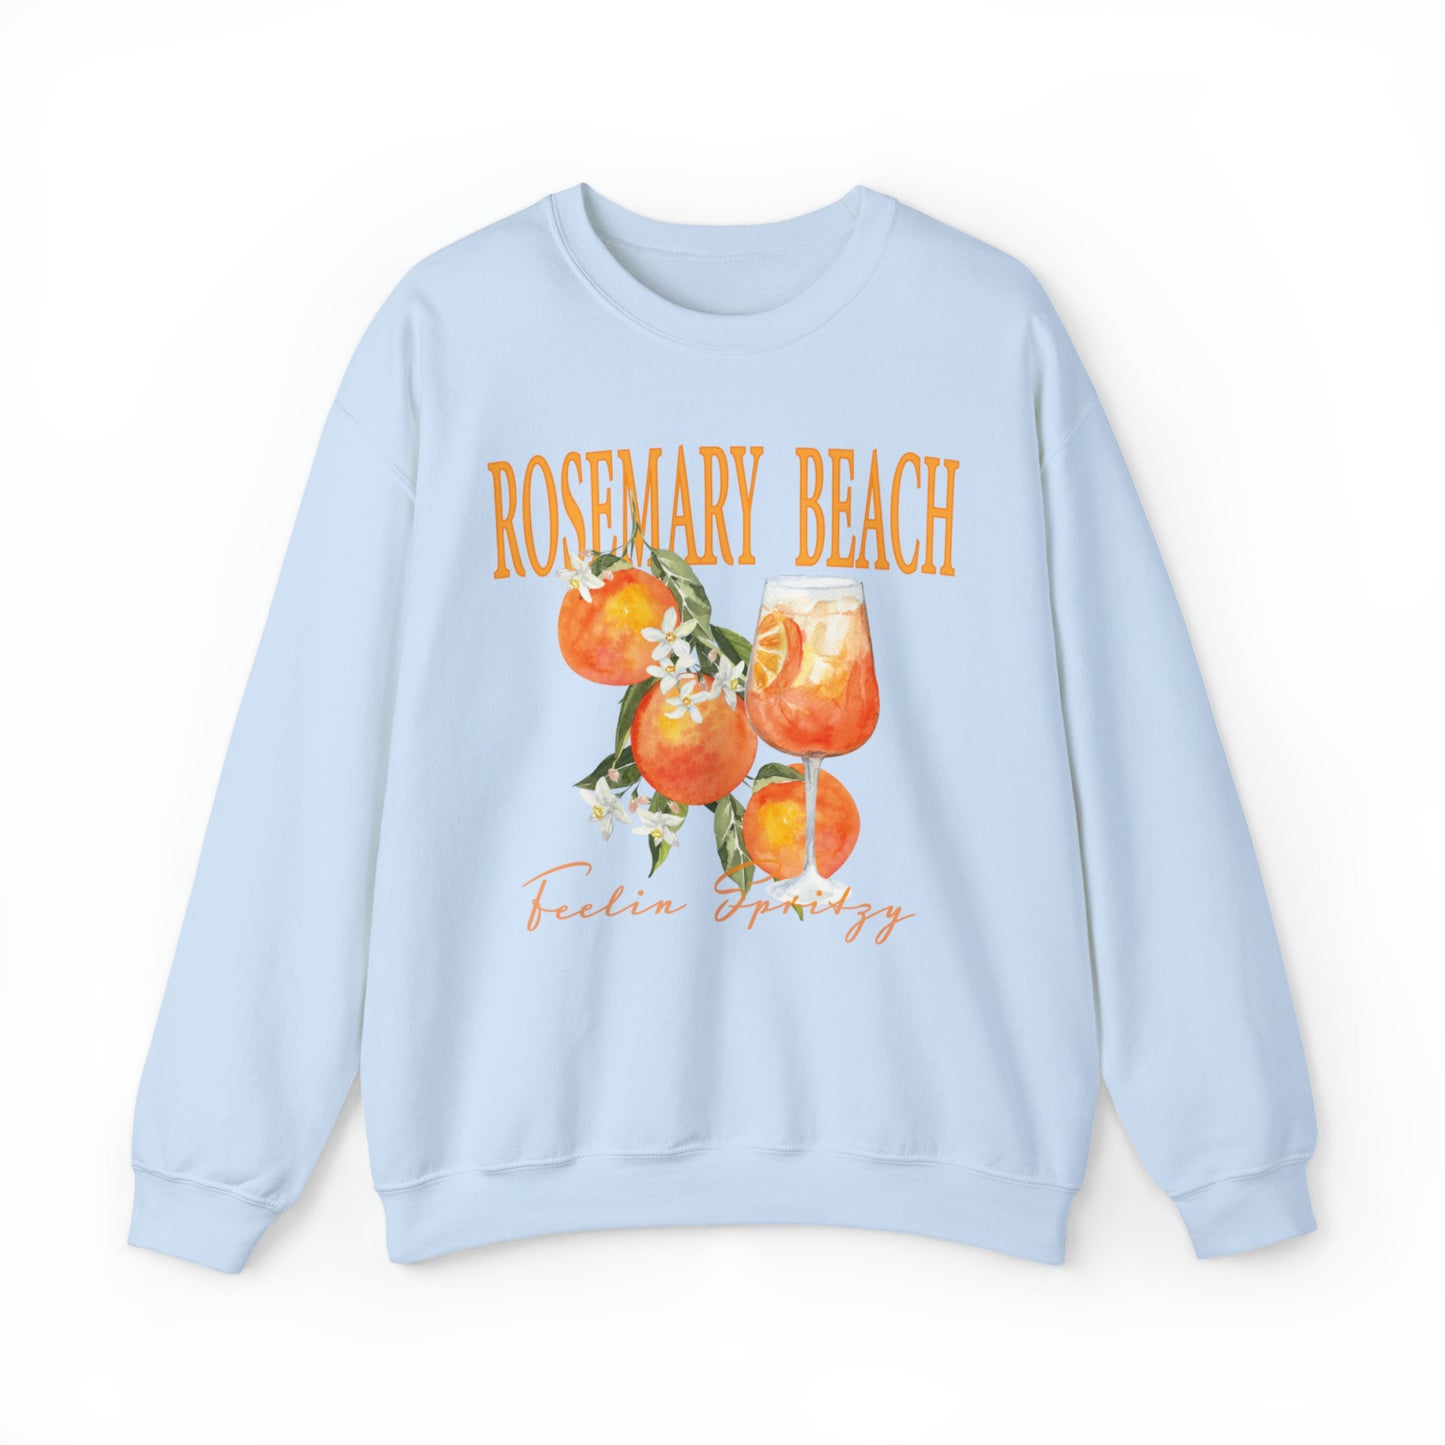 Rosemary Beach Bachelorette OhhSoSocial